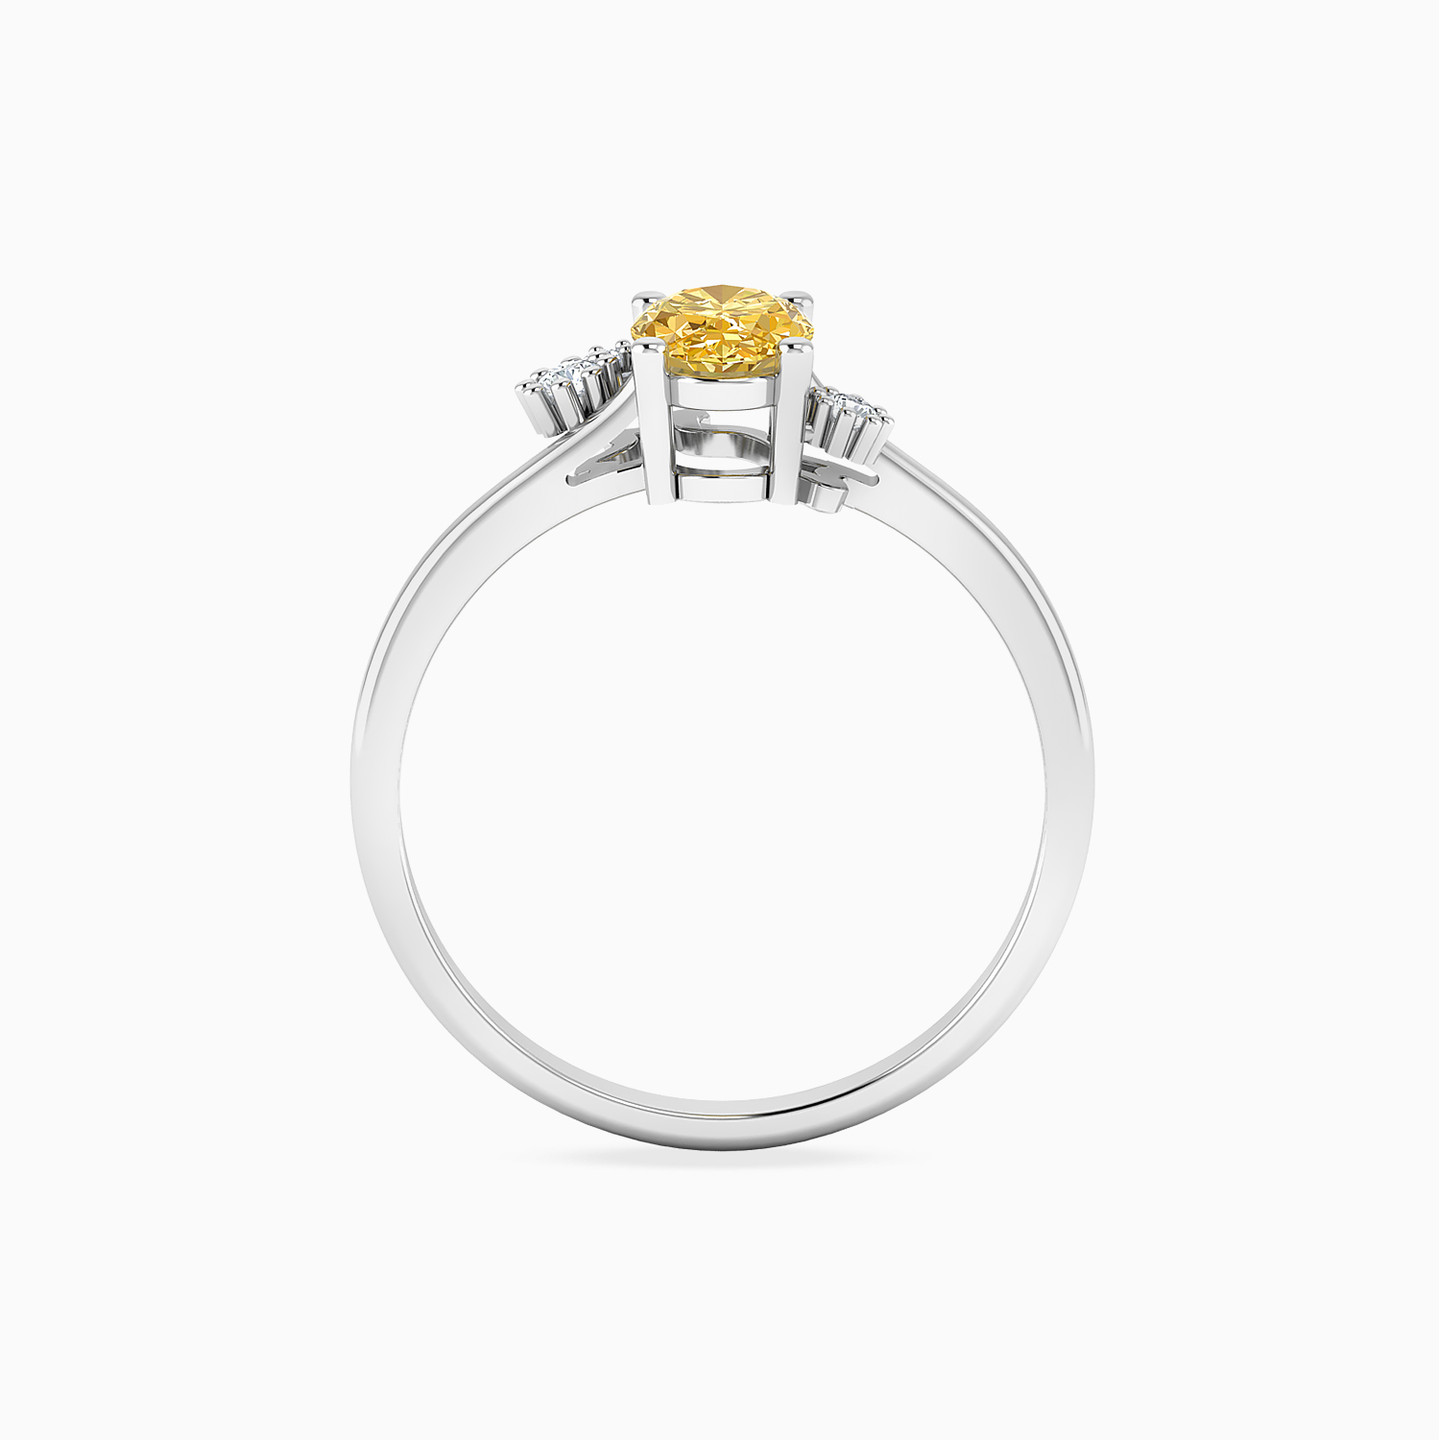 18K Gold Diamond & Colored Stones Statement Ring - 3